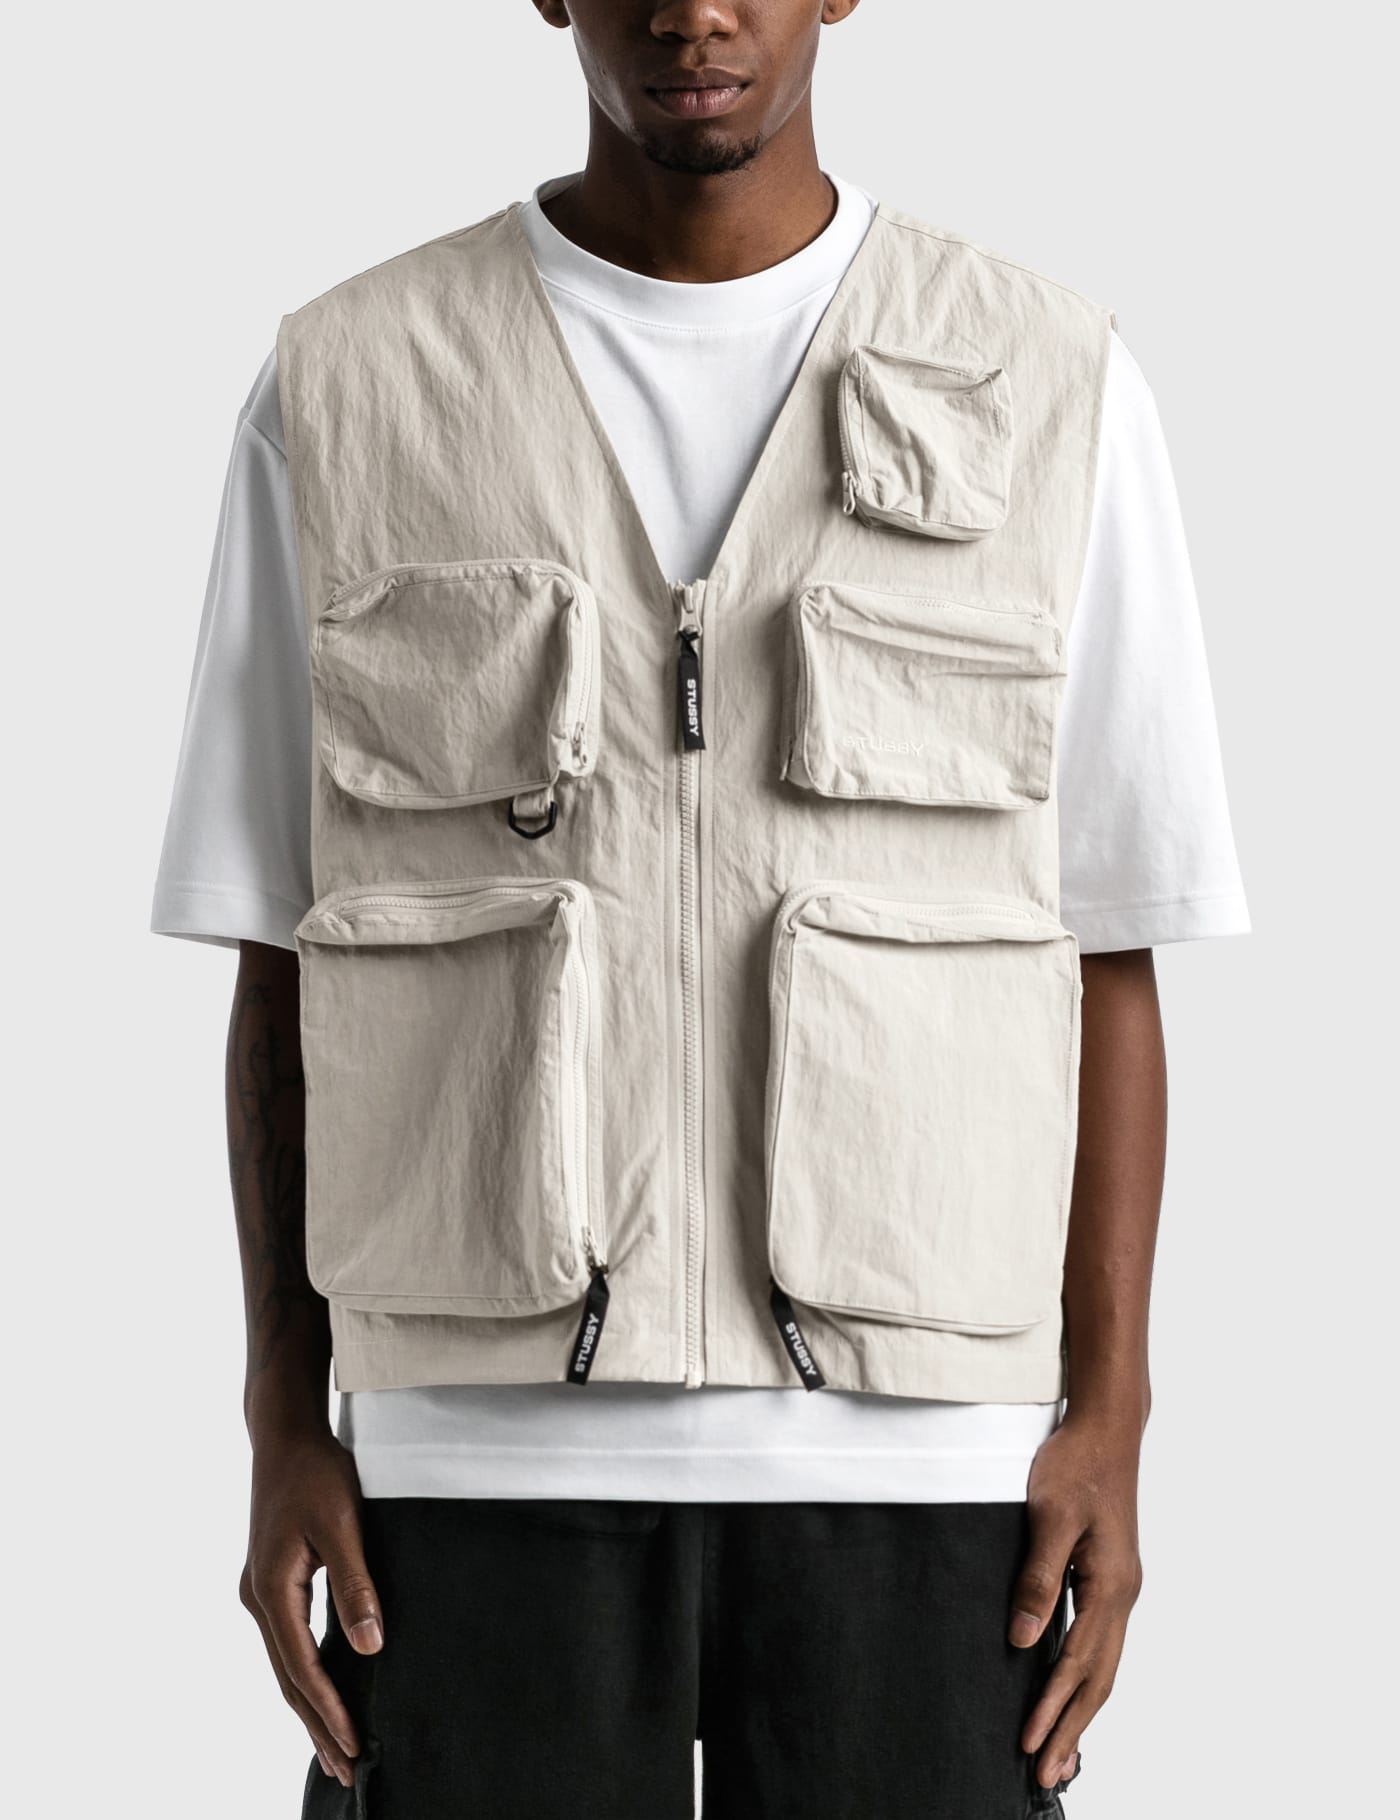 Stüssy - Nylon Approach Vest | HBX - Globally Curated Fashion and